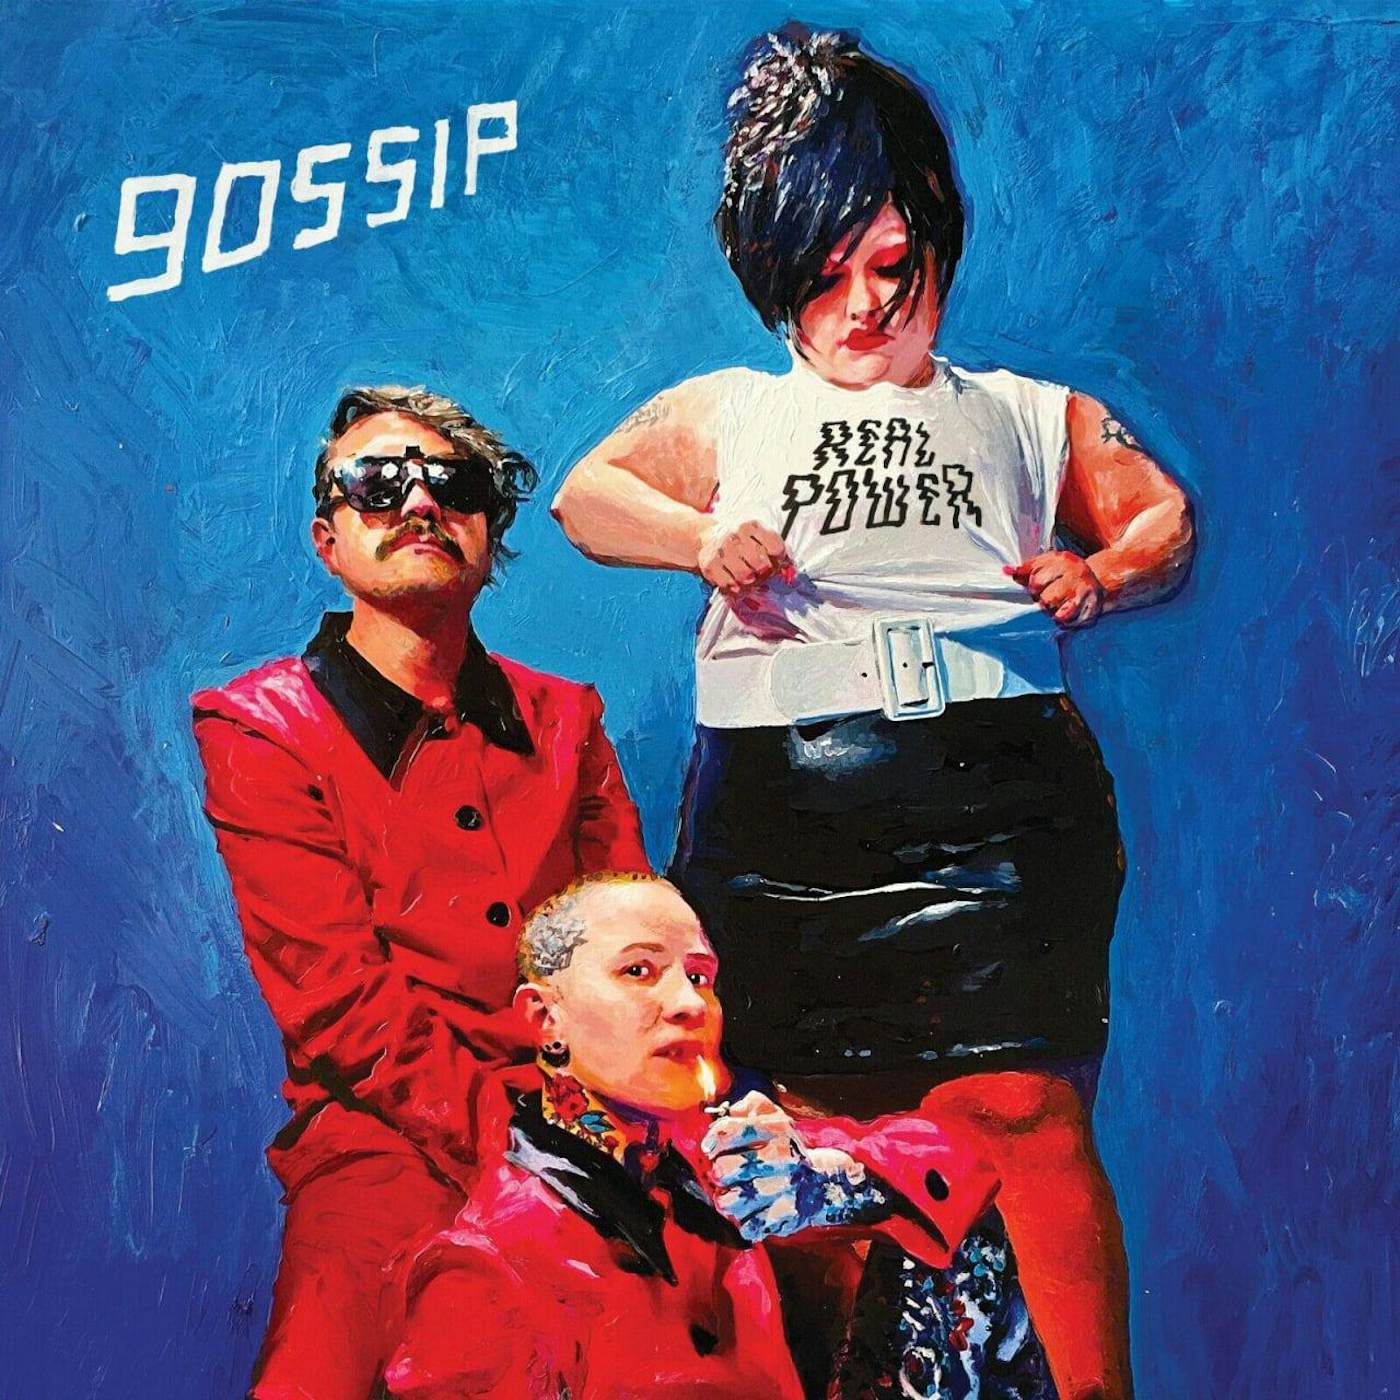 Gossip Real Power (Pink) Vinyl Record